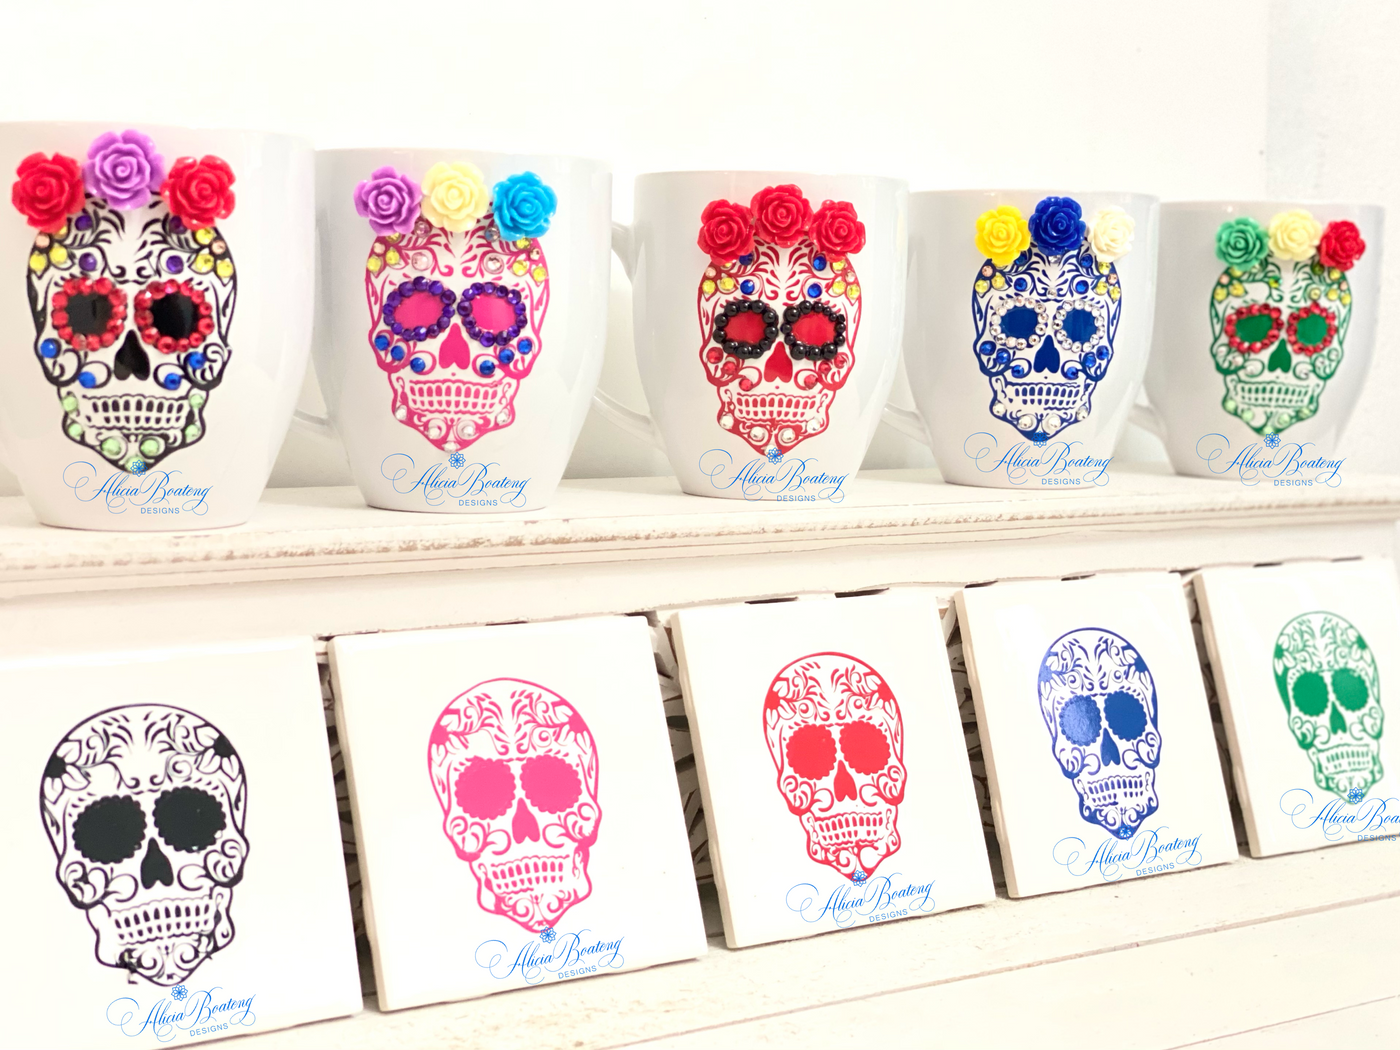 Beautifully decorated sugar skulls to celebrate el Dia de los Muertos. Adorned with colored gems, porcelain rosettes and adhesive vinyl.